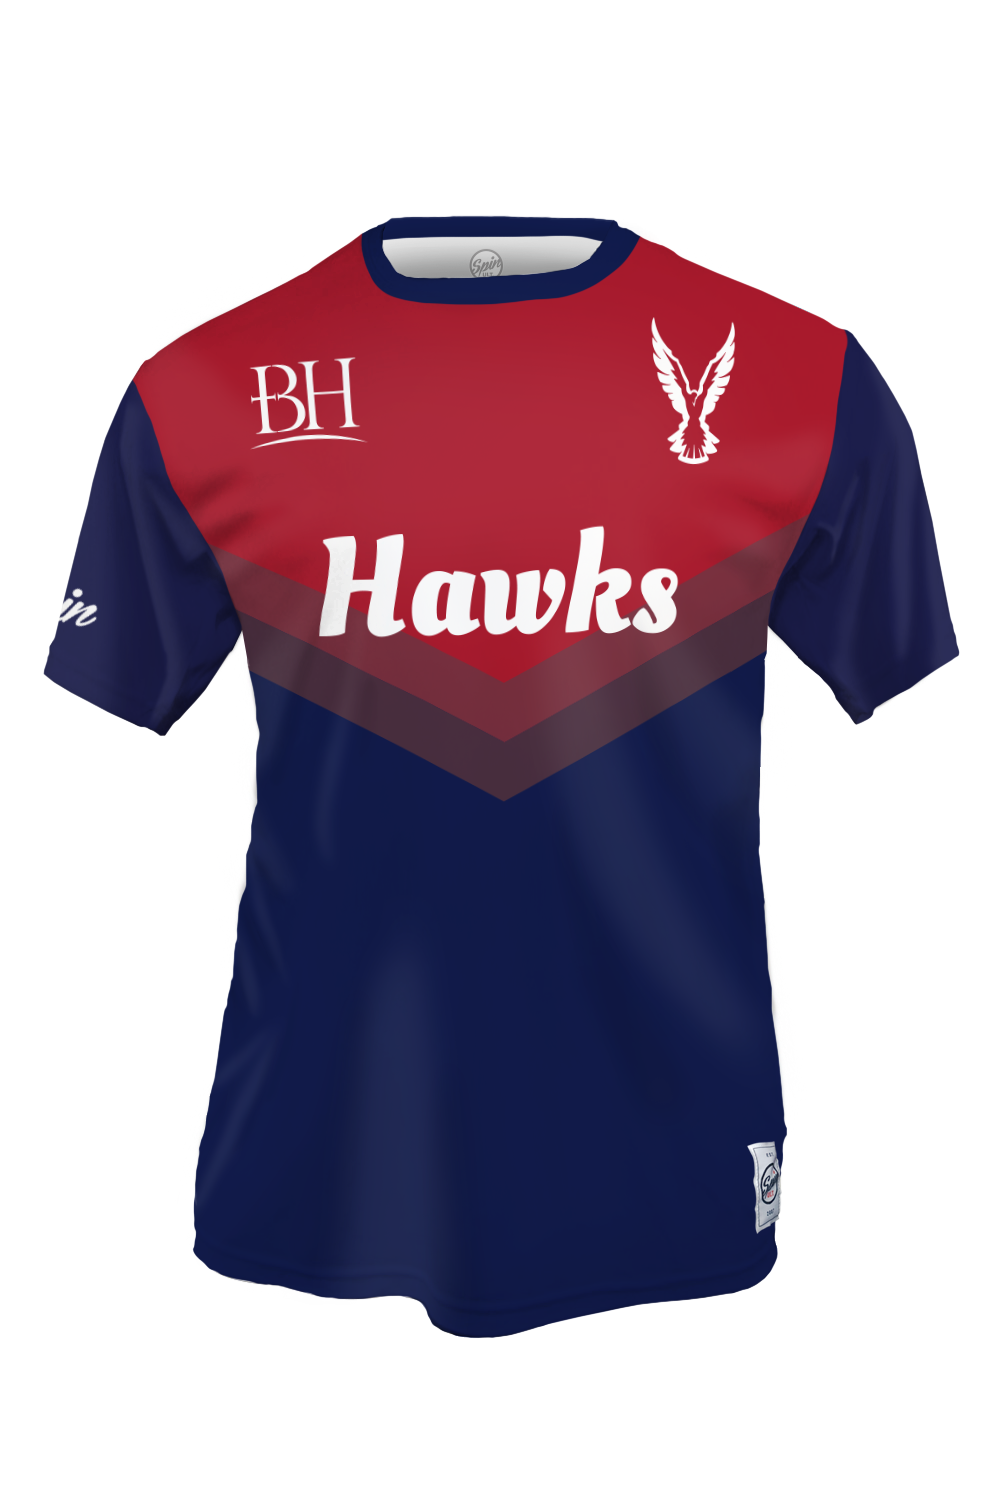 hawks sublimation jersey